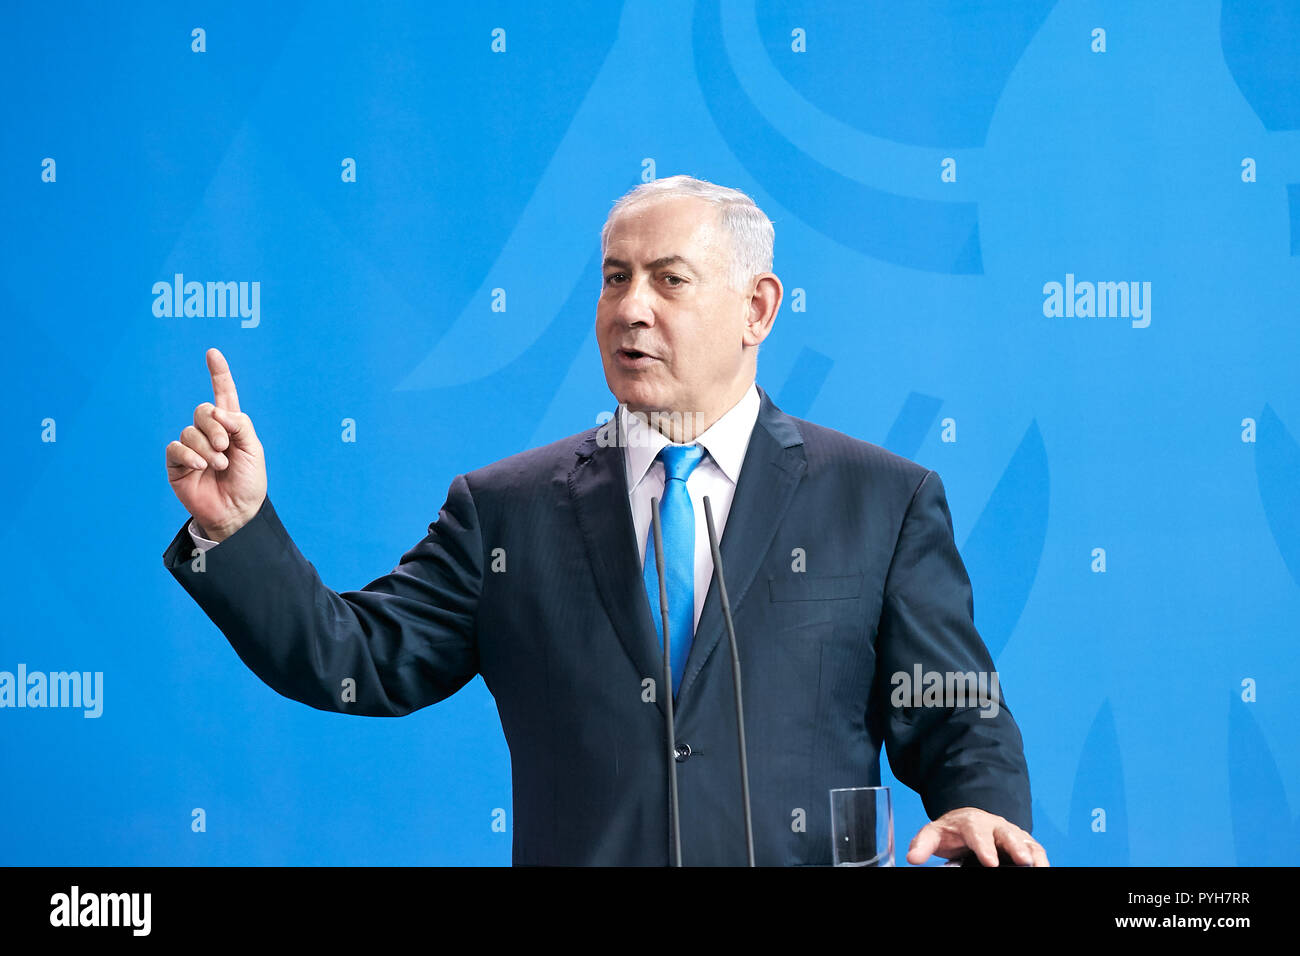 Berlin, Allemagne - l'état d'Israël le Premier Ministre Benjamin Netanyahu. Banque D'Images